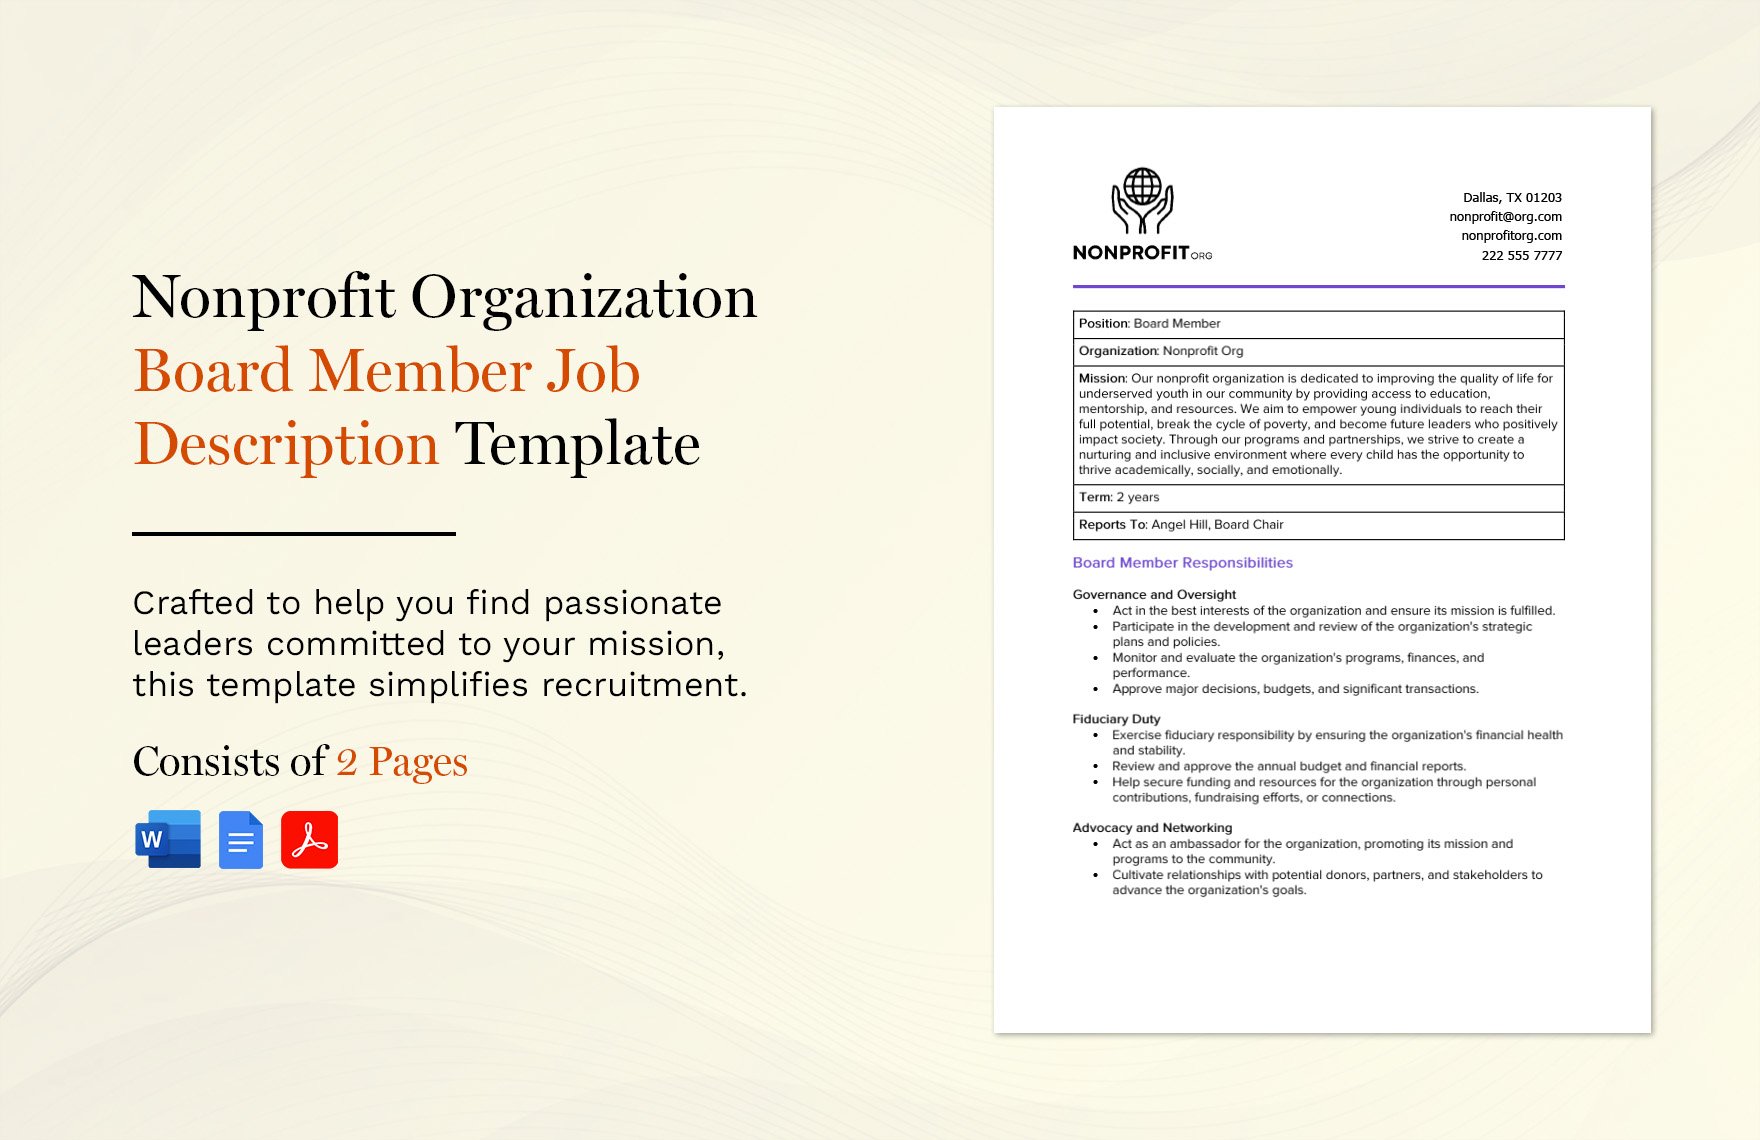 Nonprofit Organization Board Member Job Description Template